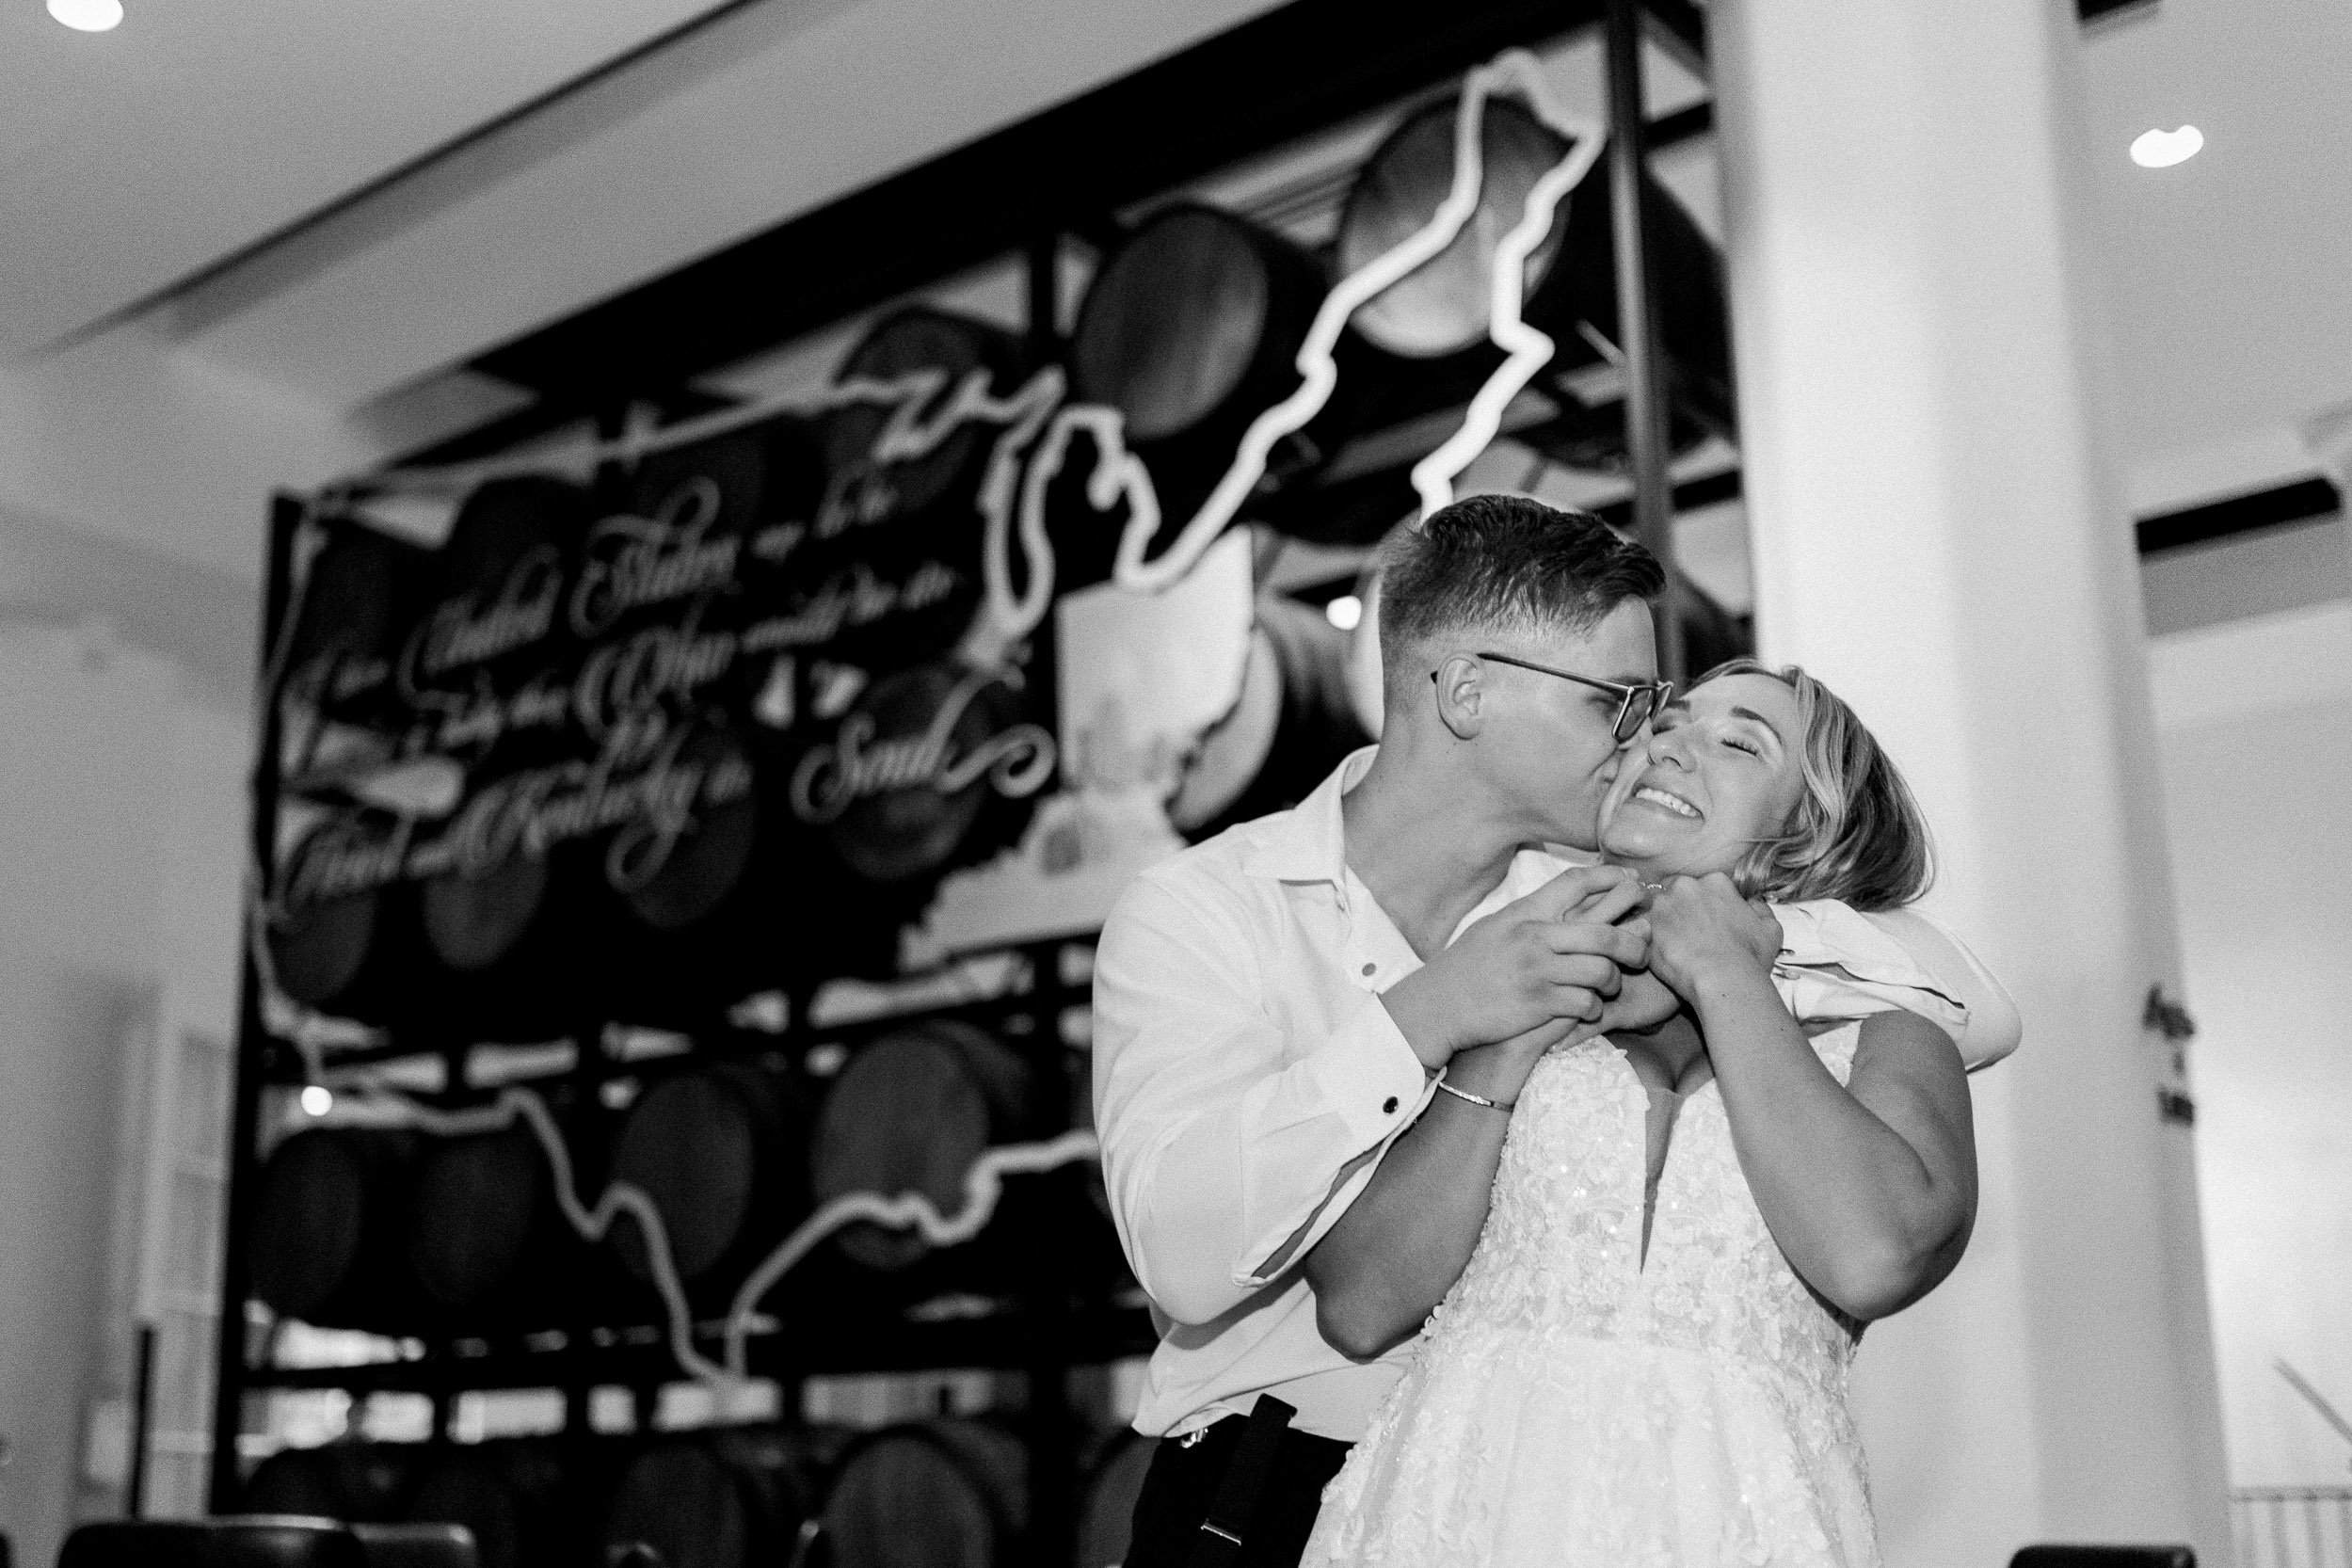 Black and white wedding photos | Modern American weddings